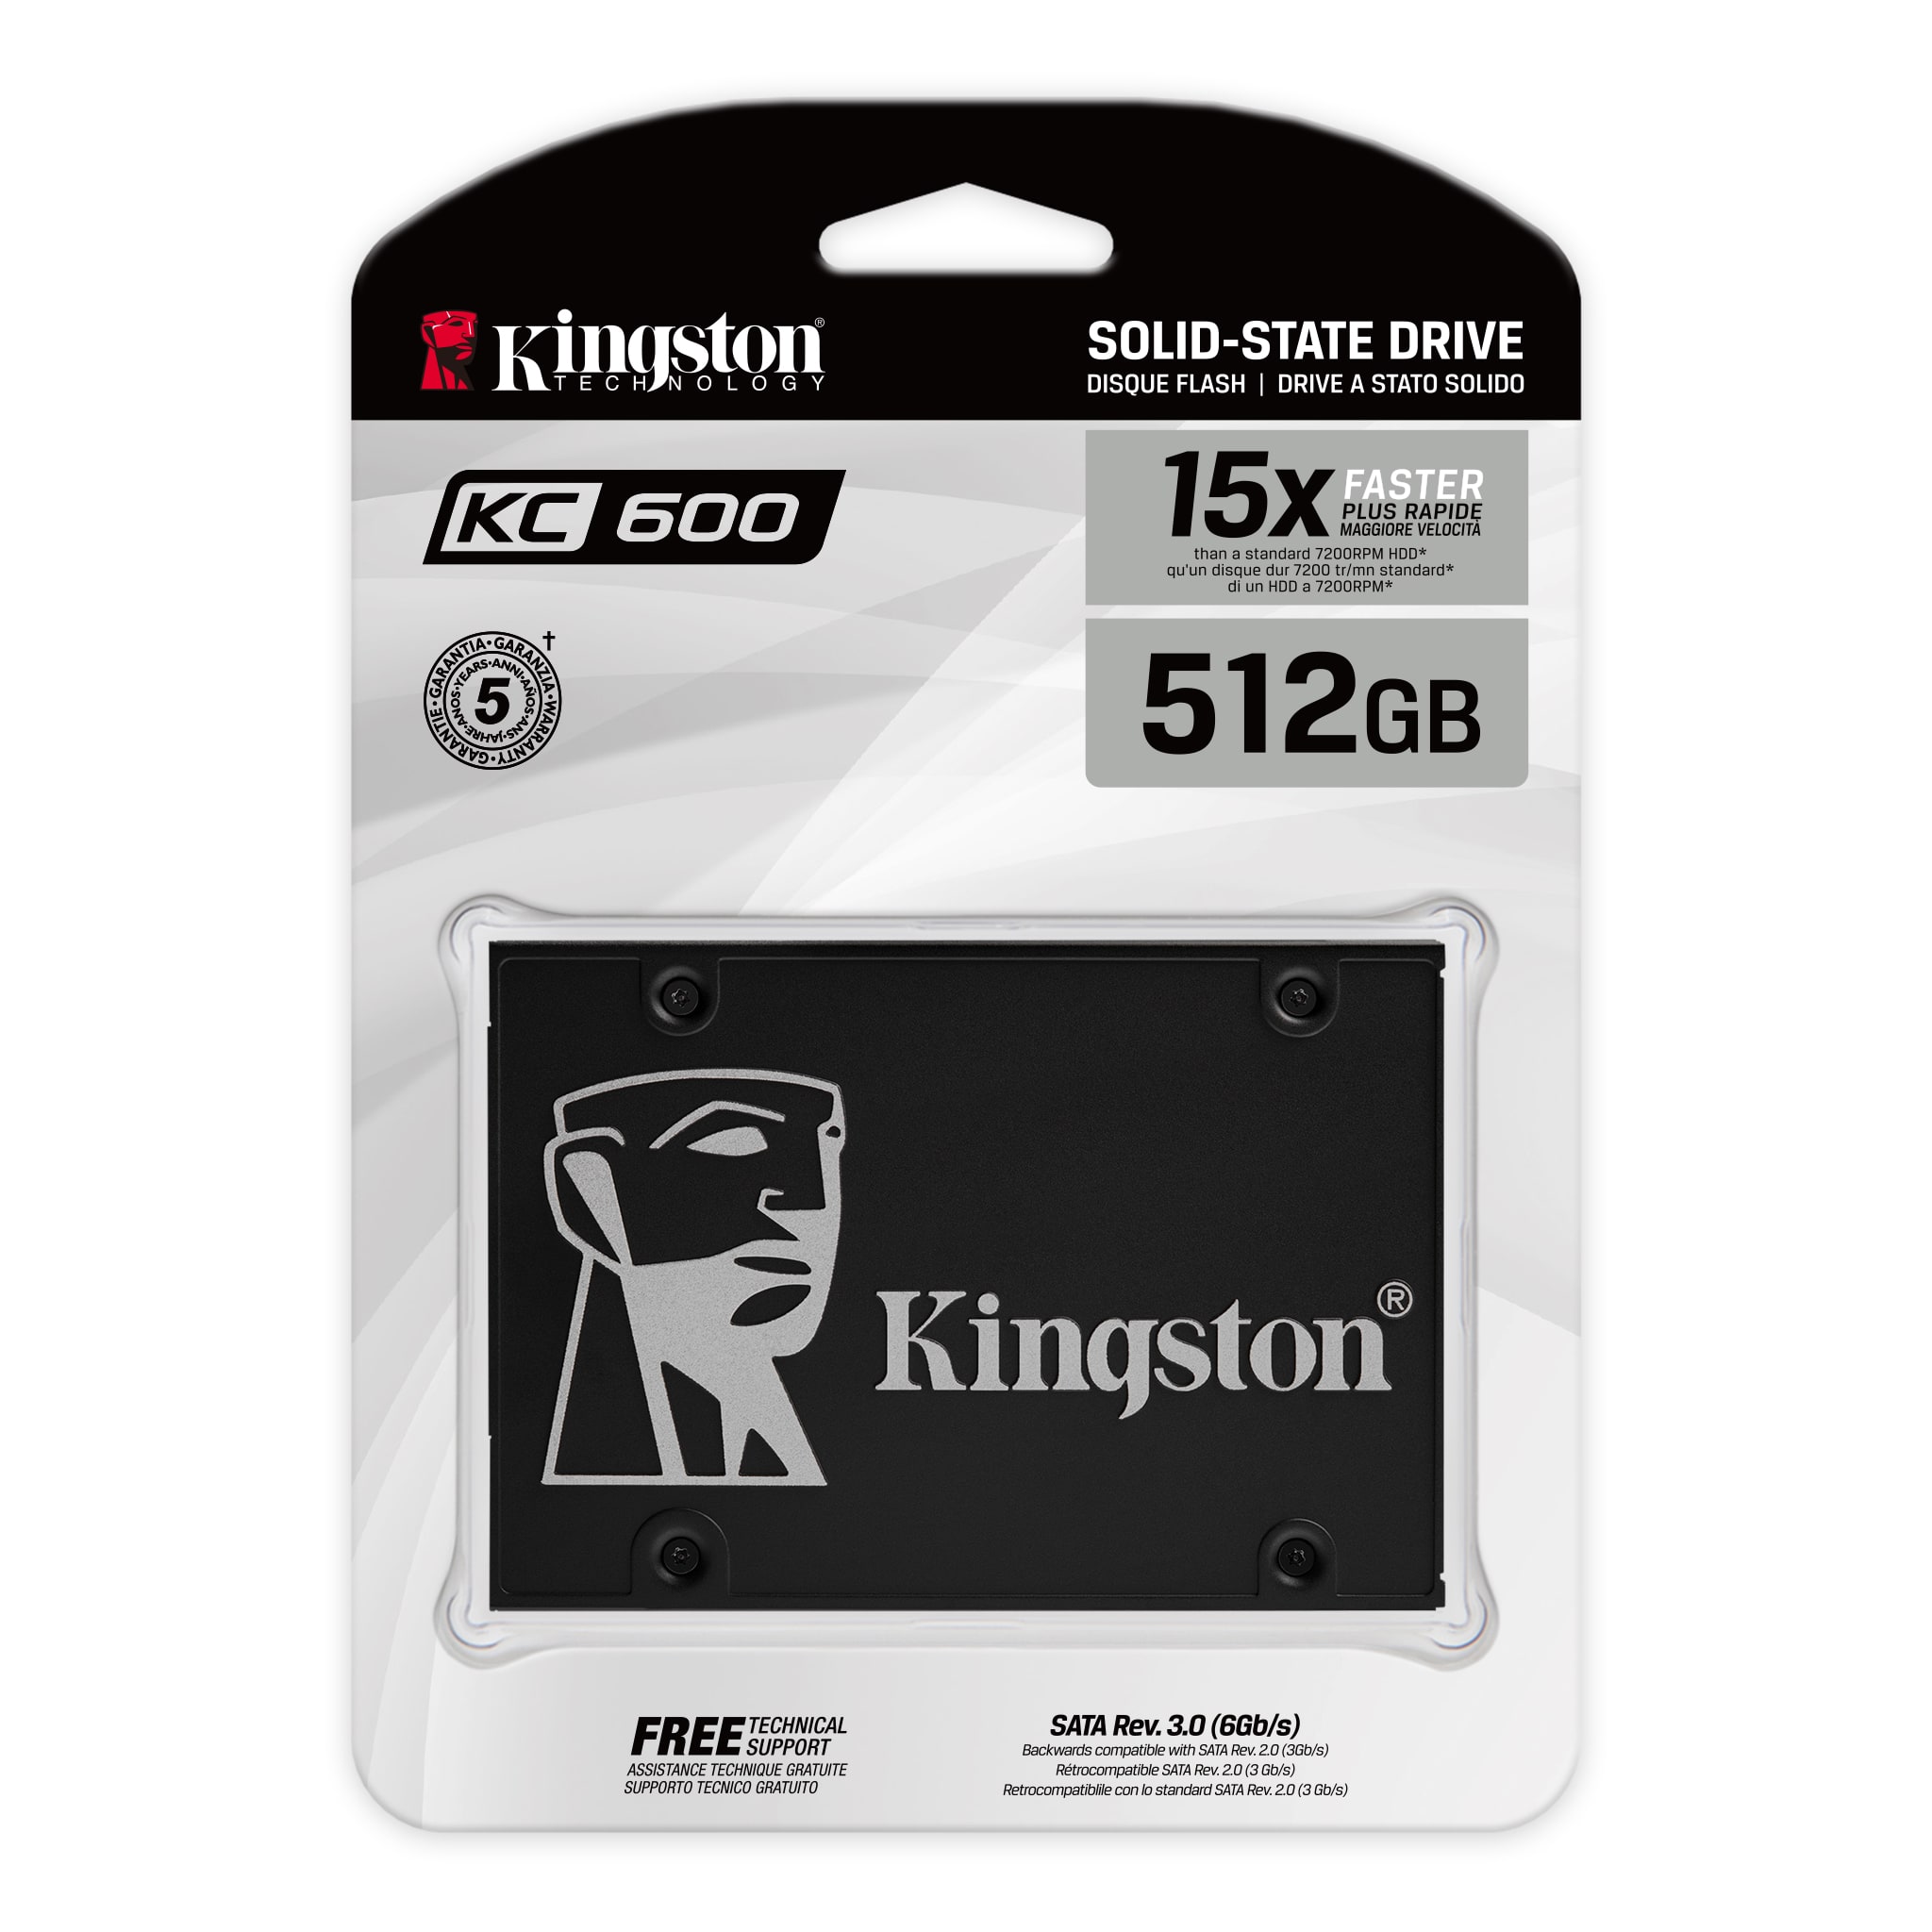 Kingston Kingston 512 GB SSD mSATA interne SATA 6 Gb/s au détail SKC600MS/512G 